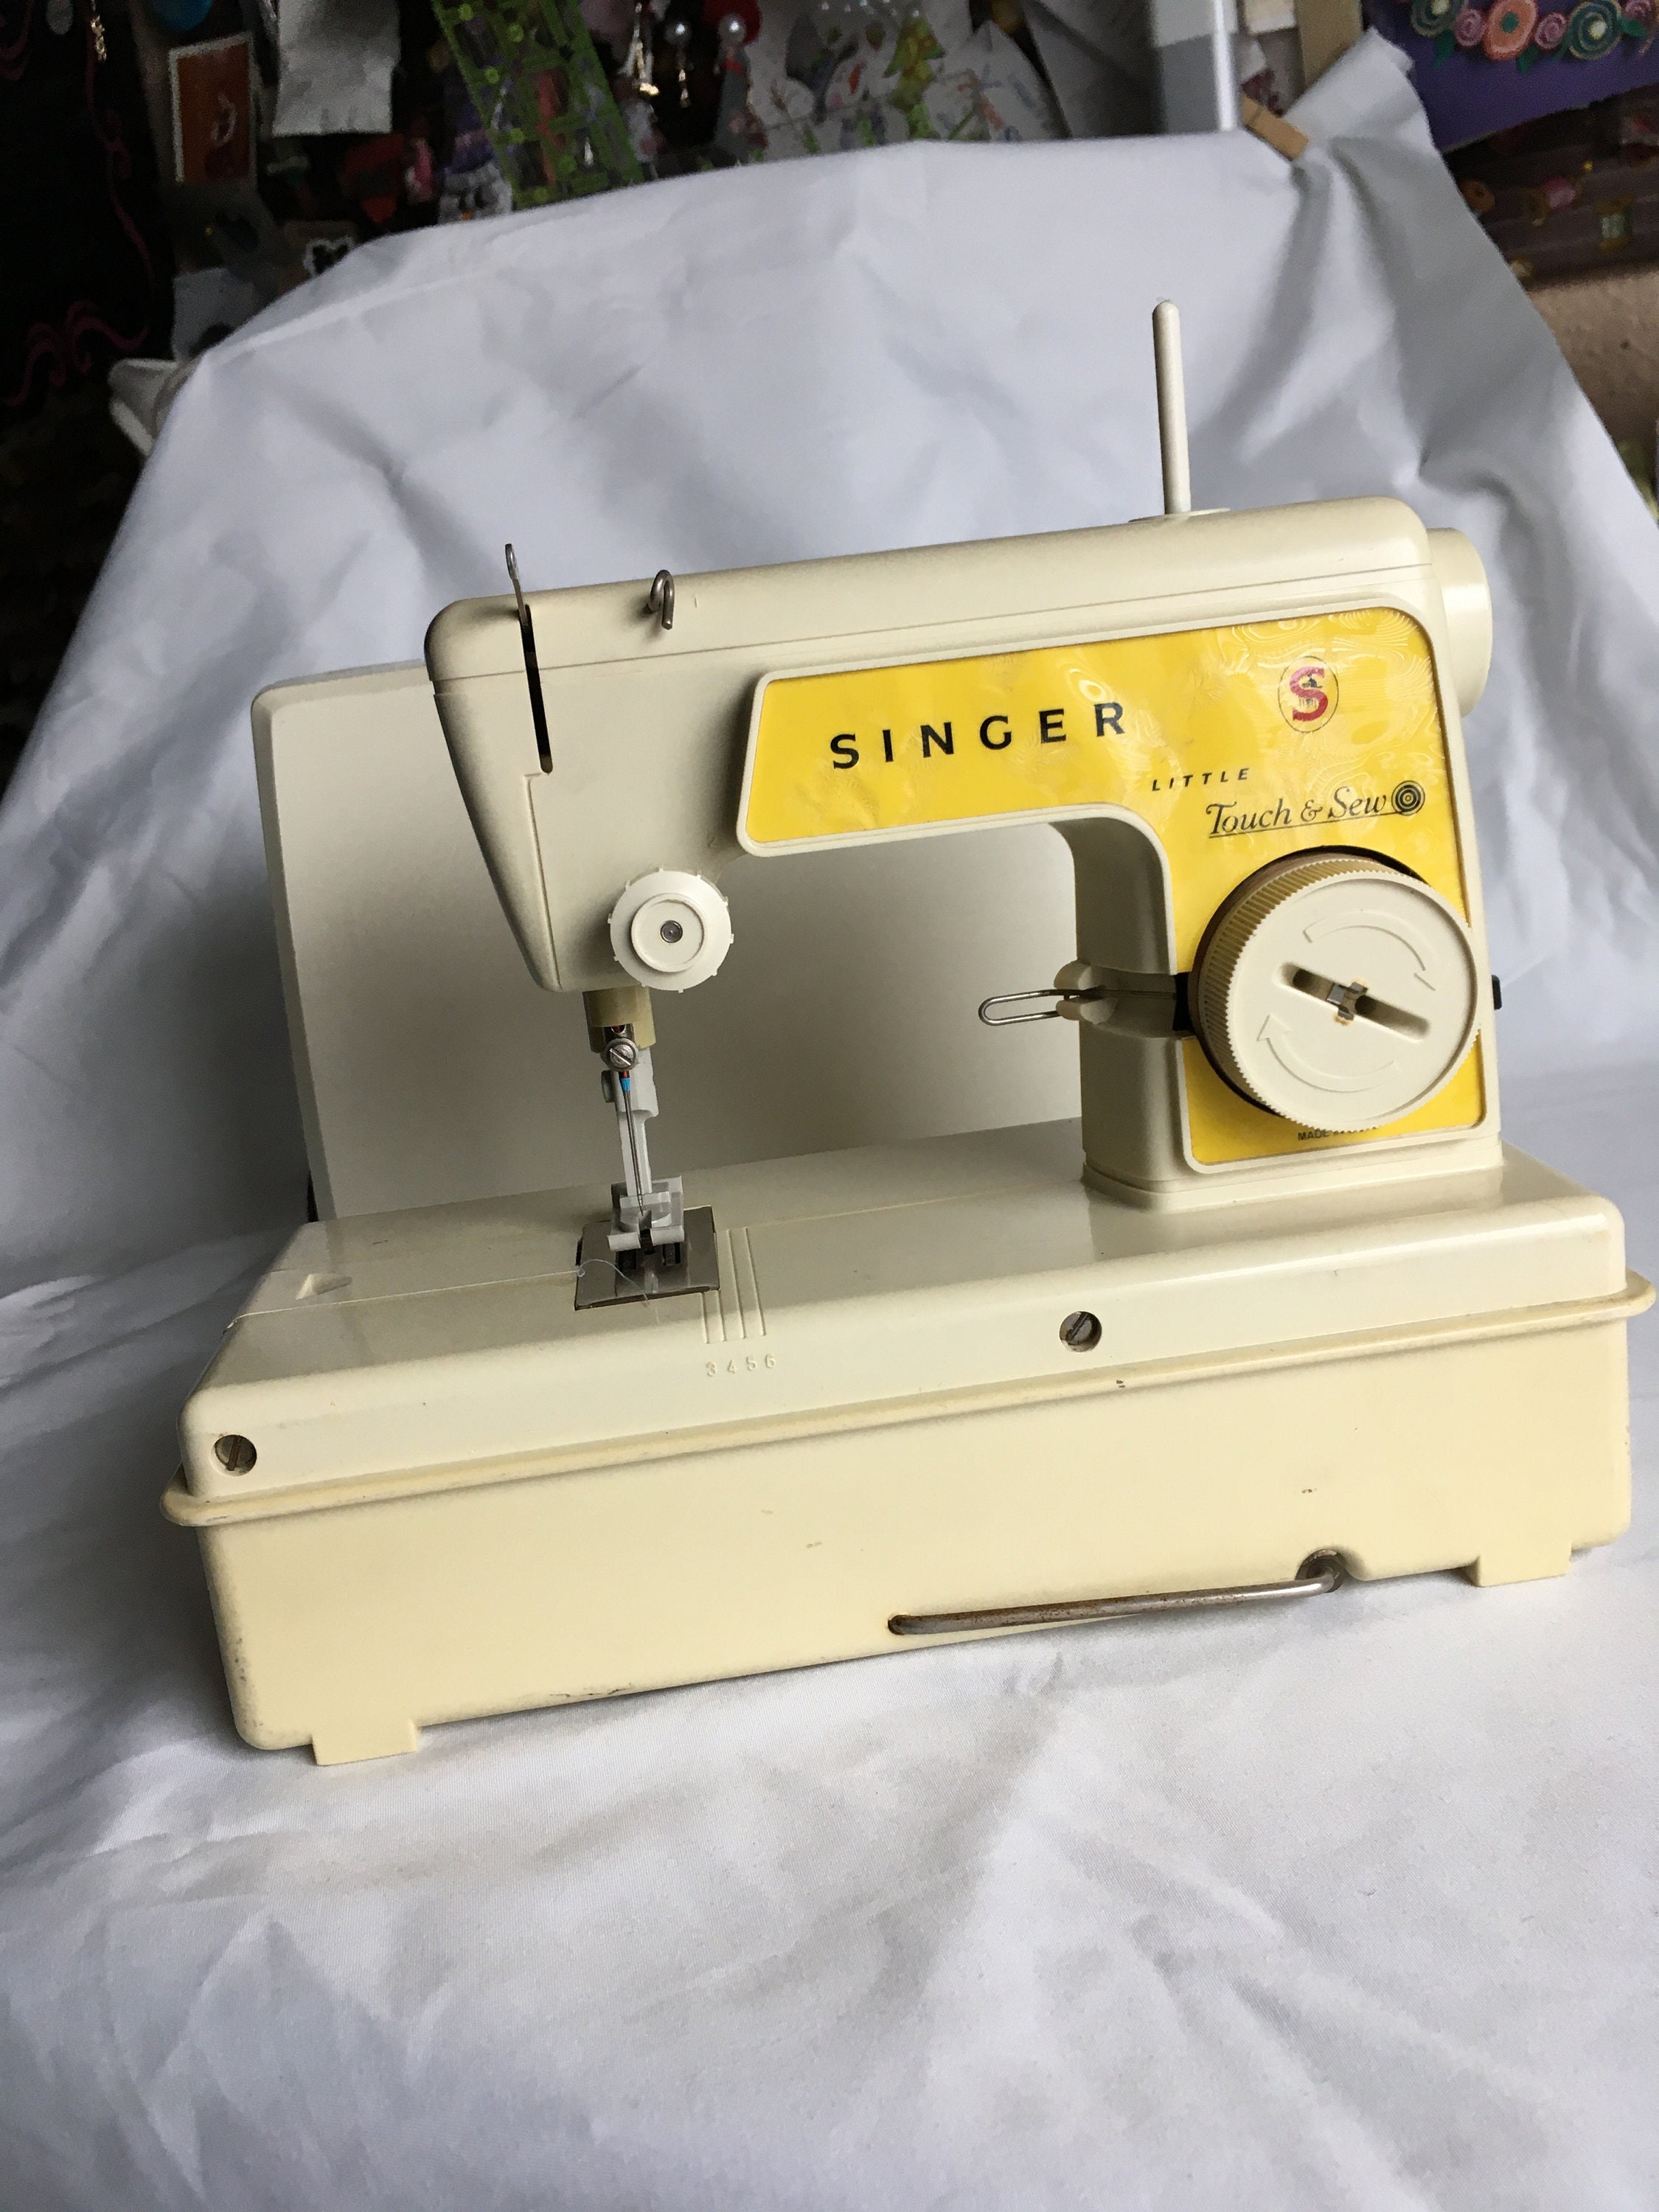 Vintage Singer Deluxe Zig-Zag Sewing Machine Accessories Model 620 Part  161848